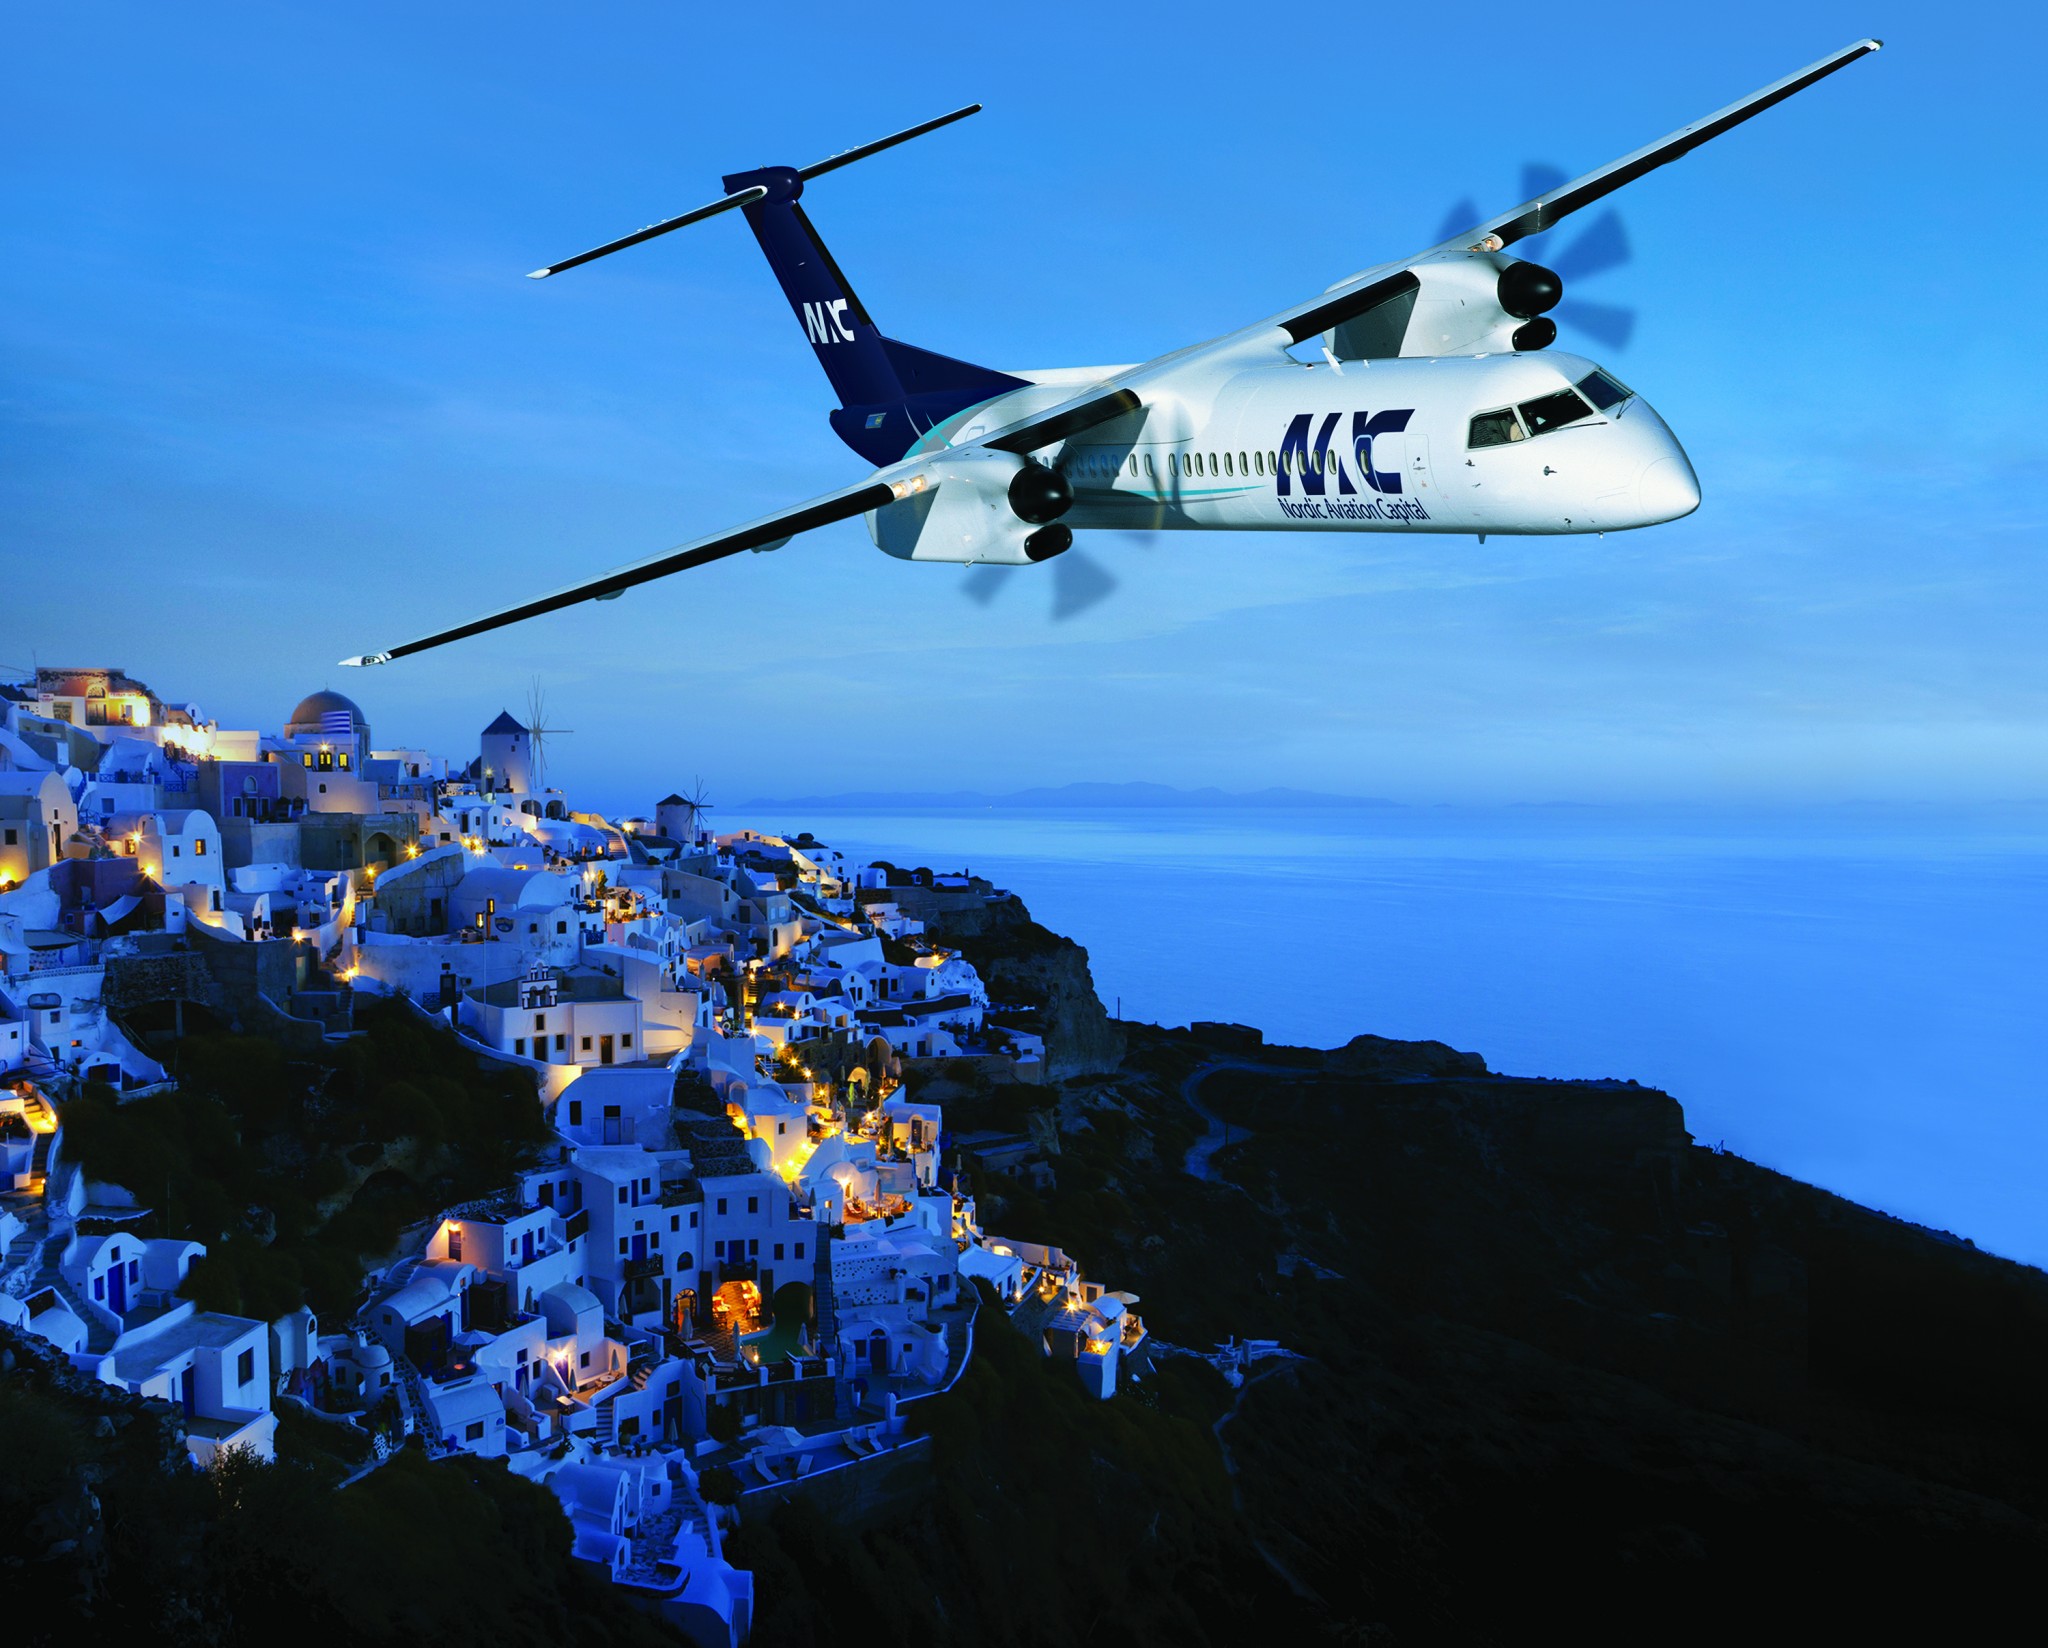 NAC completes ATR 42-500 sale agreement with Skyways Technics